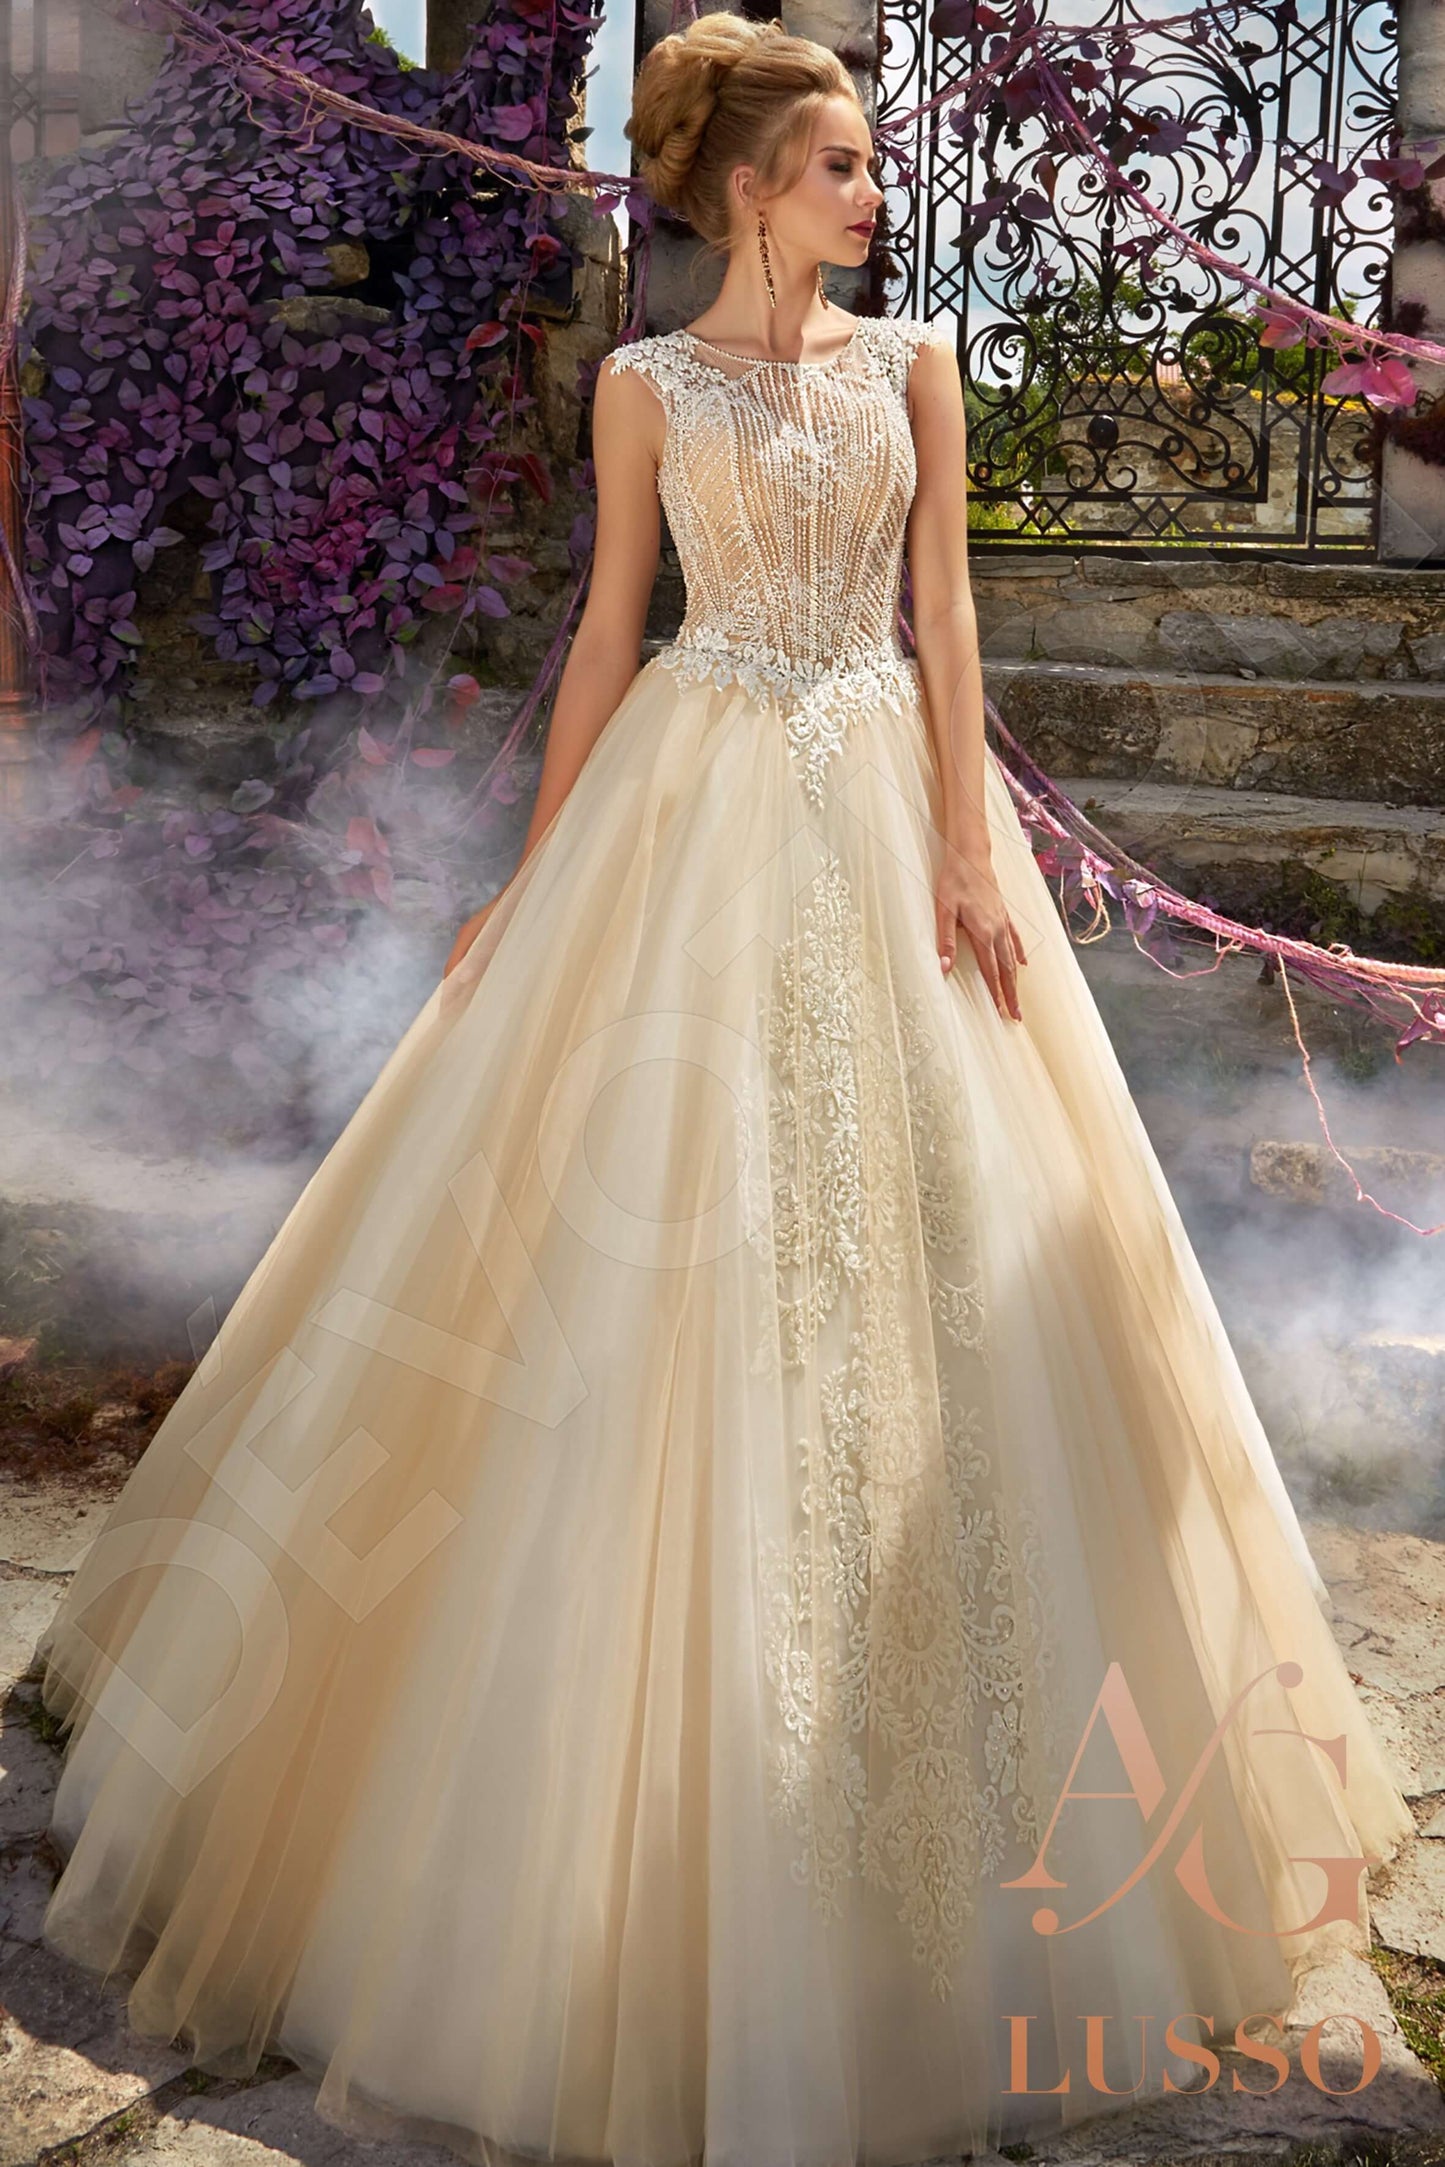 Arna Full back Princess/Ball Gown Short/ Cap sleeve Wedding Dress Front